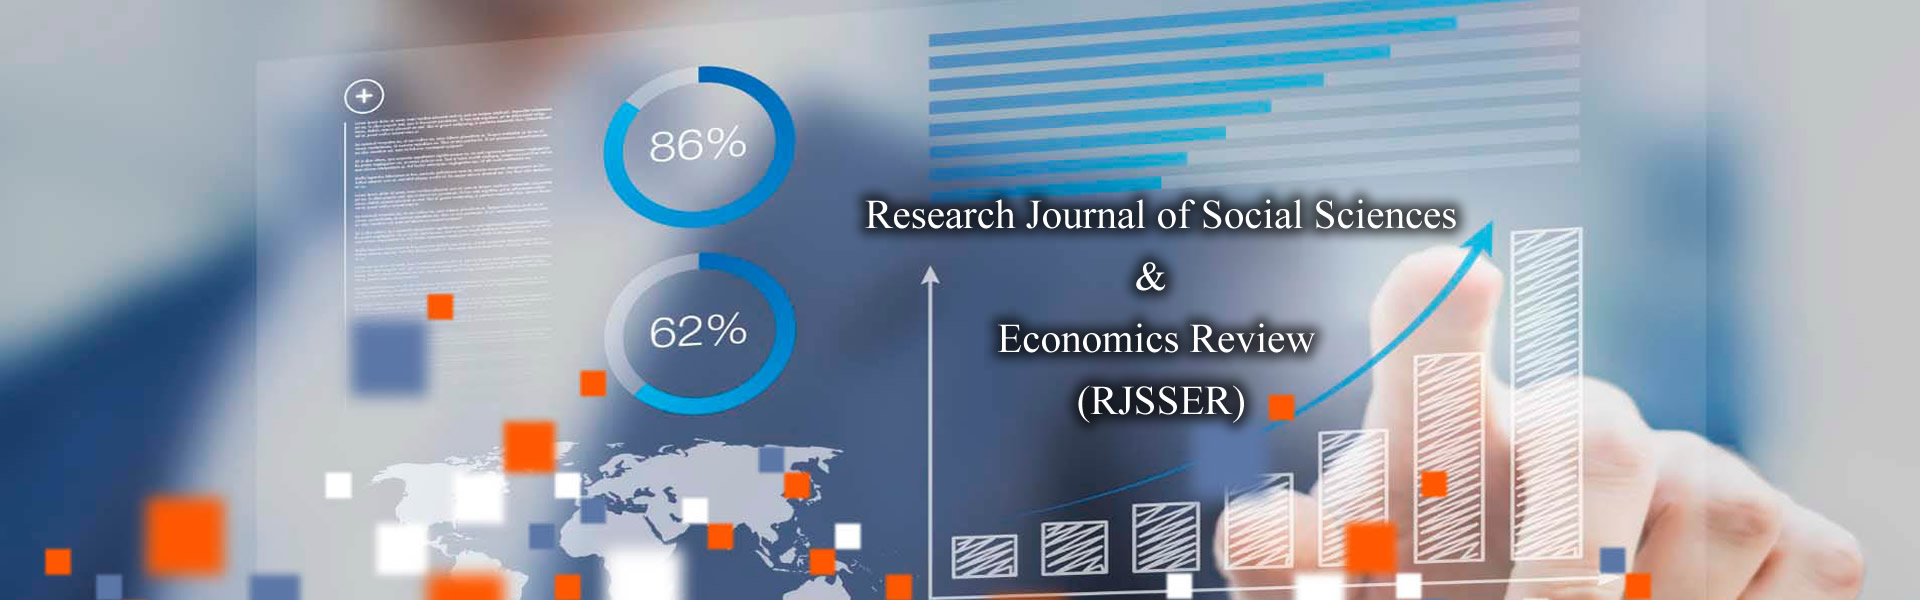 research journal of social sciences & economics review